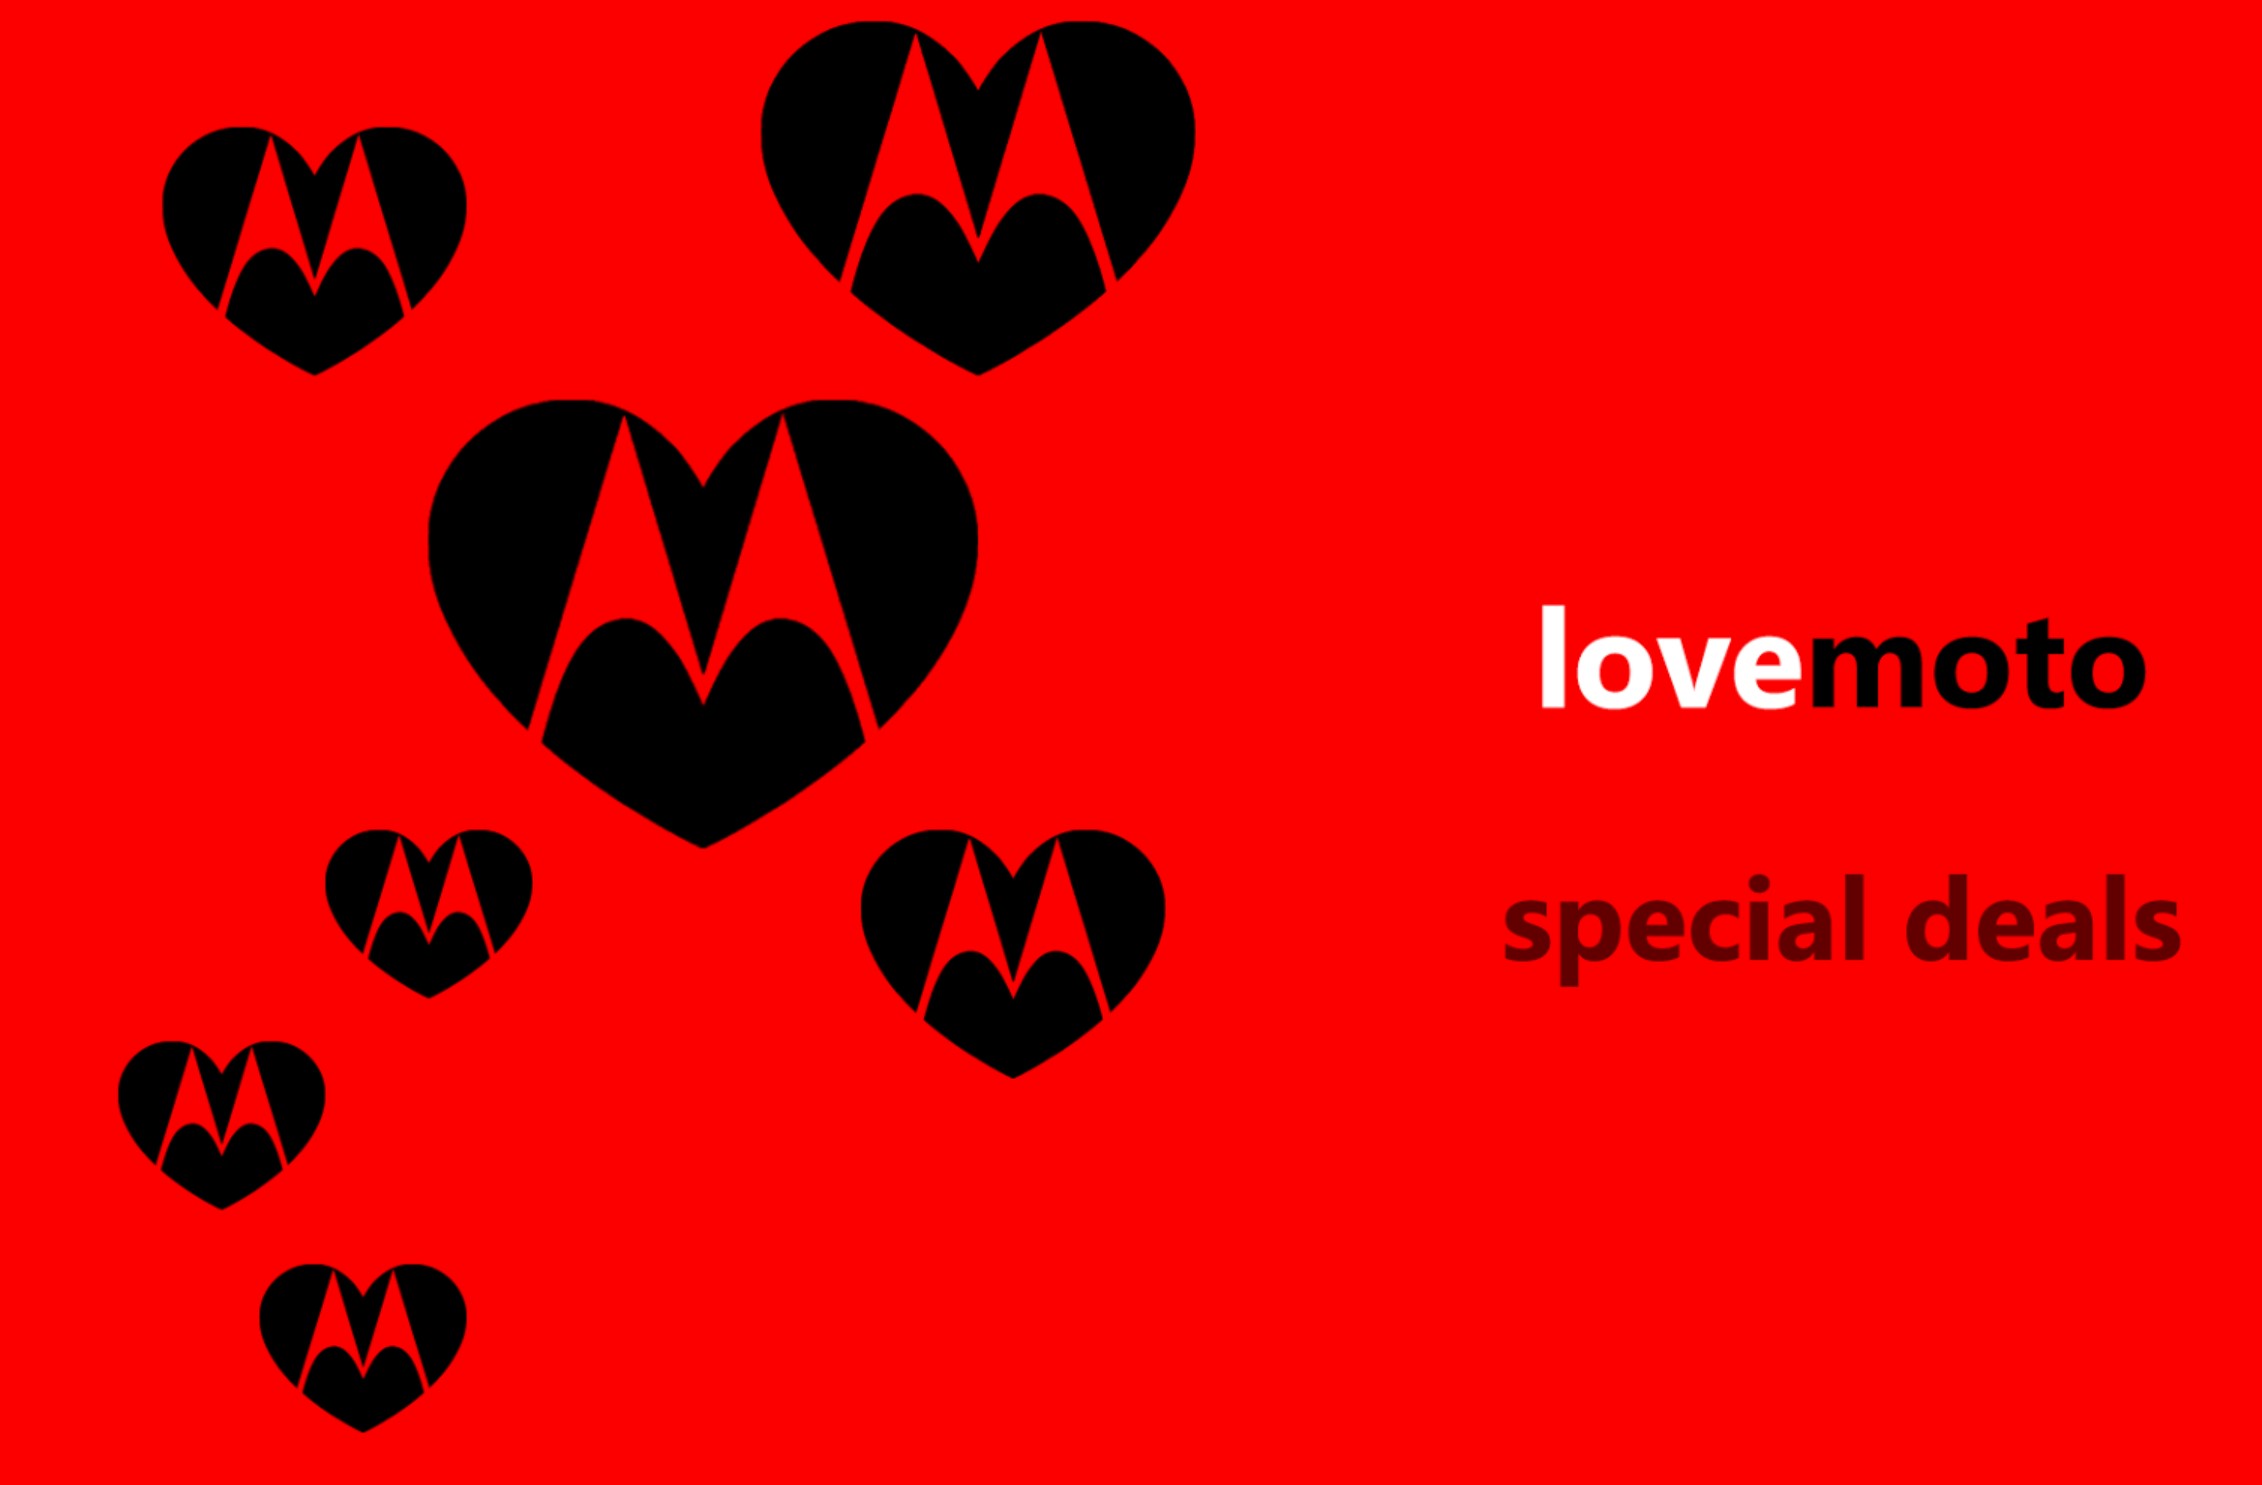 Motorola gets sweet for Valentine’s Day